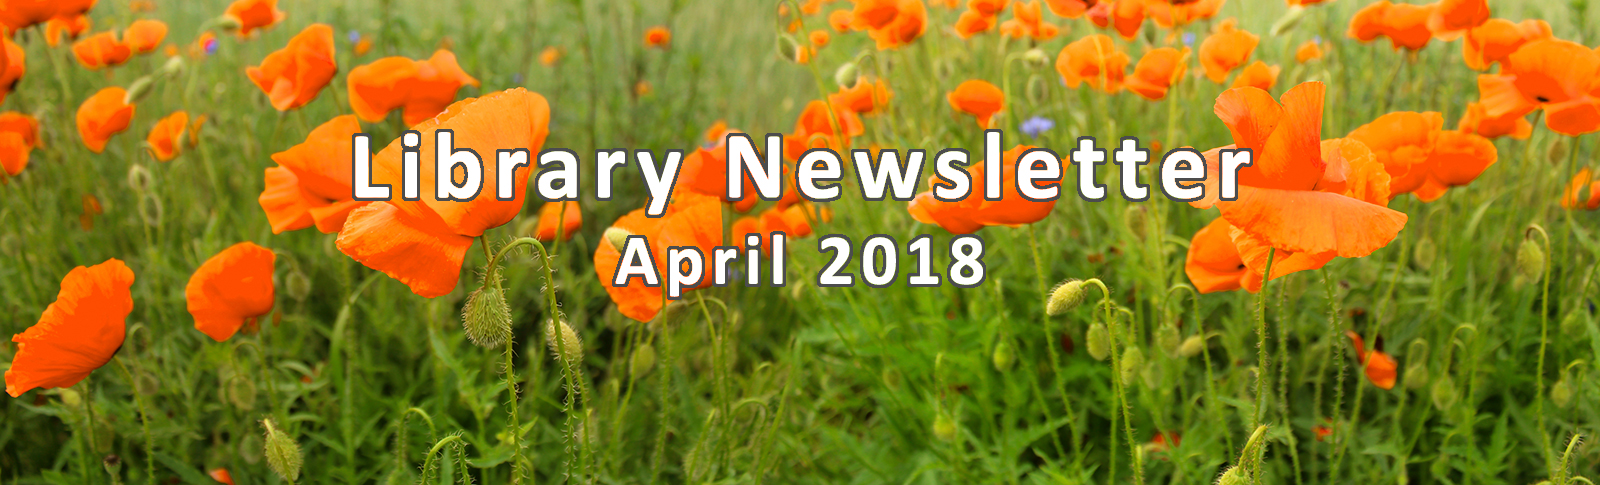 Library Newsletter - April 2018